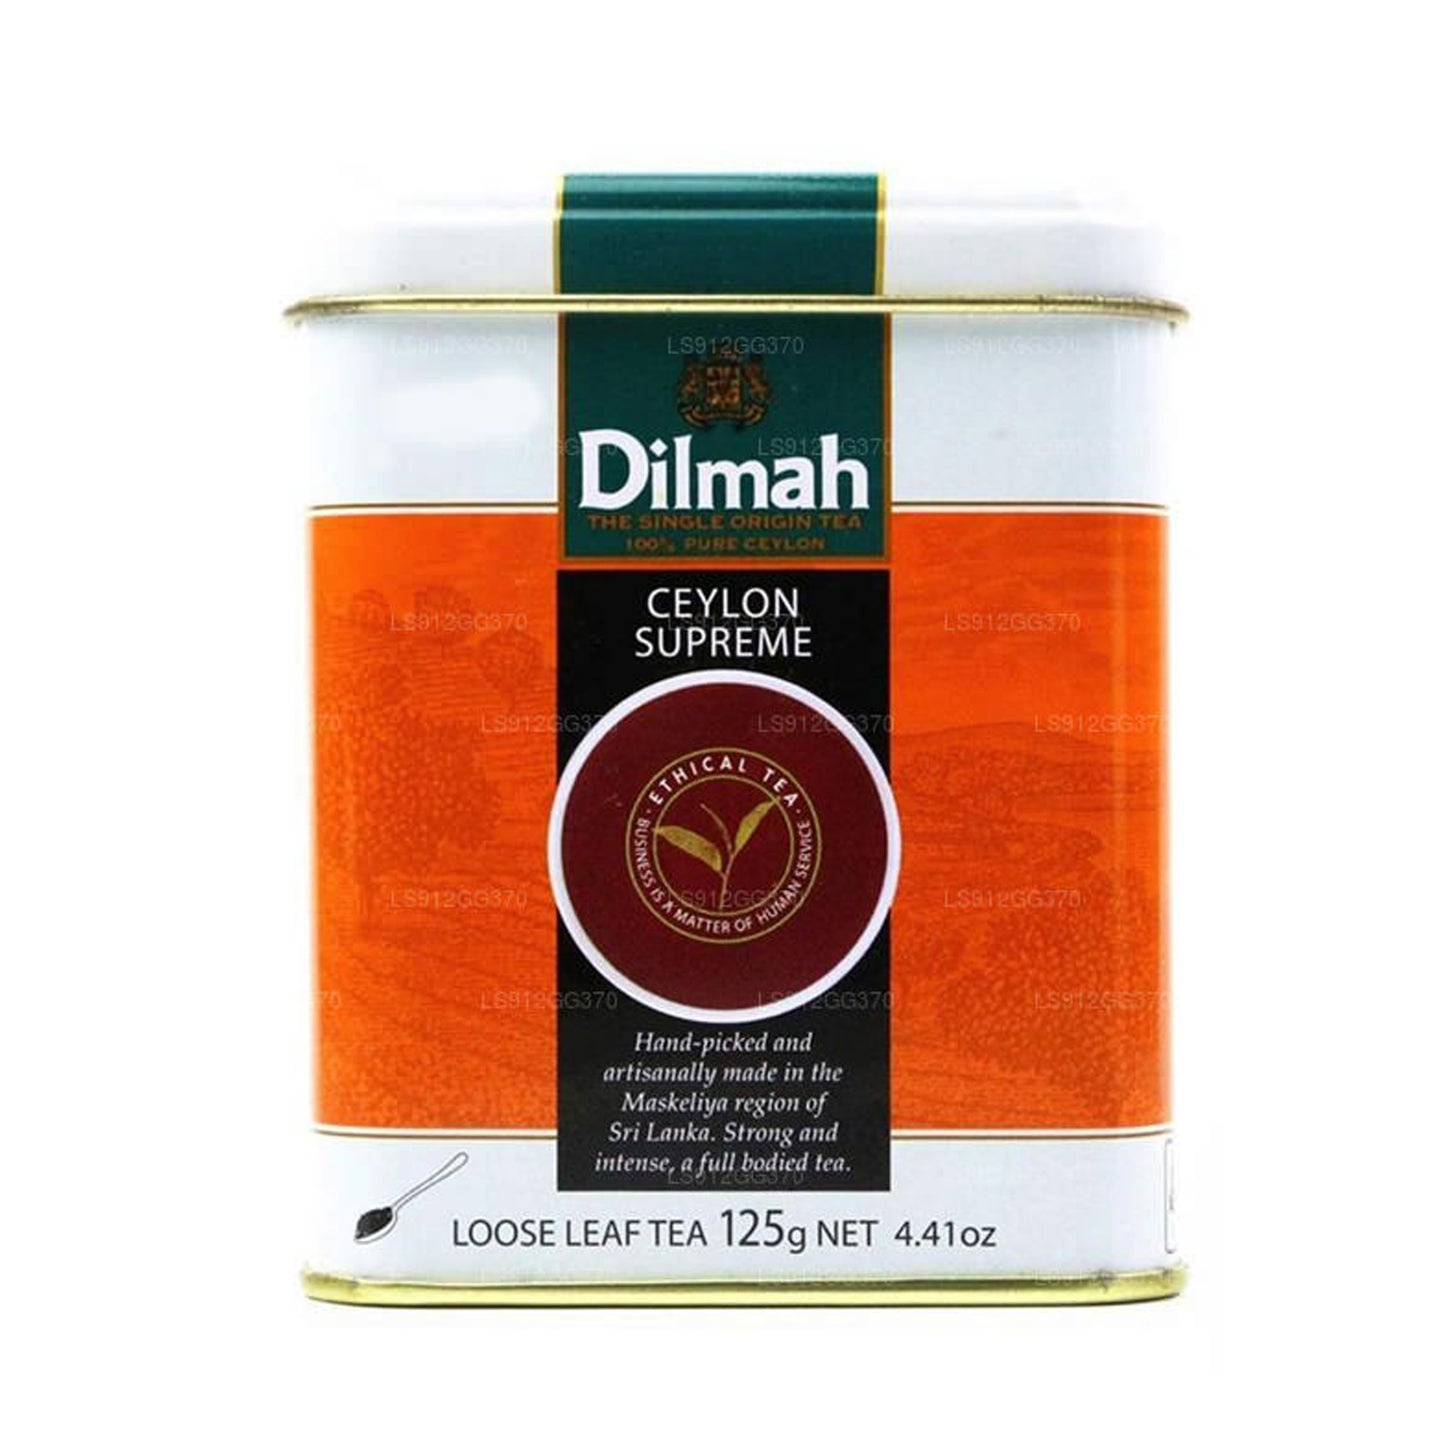 Dilmah Ceylon Supreme Loose Leaf Tea caddy (125g)